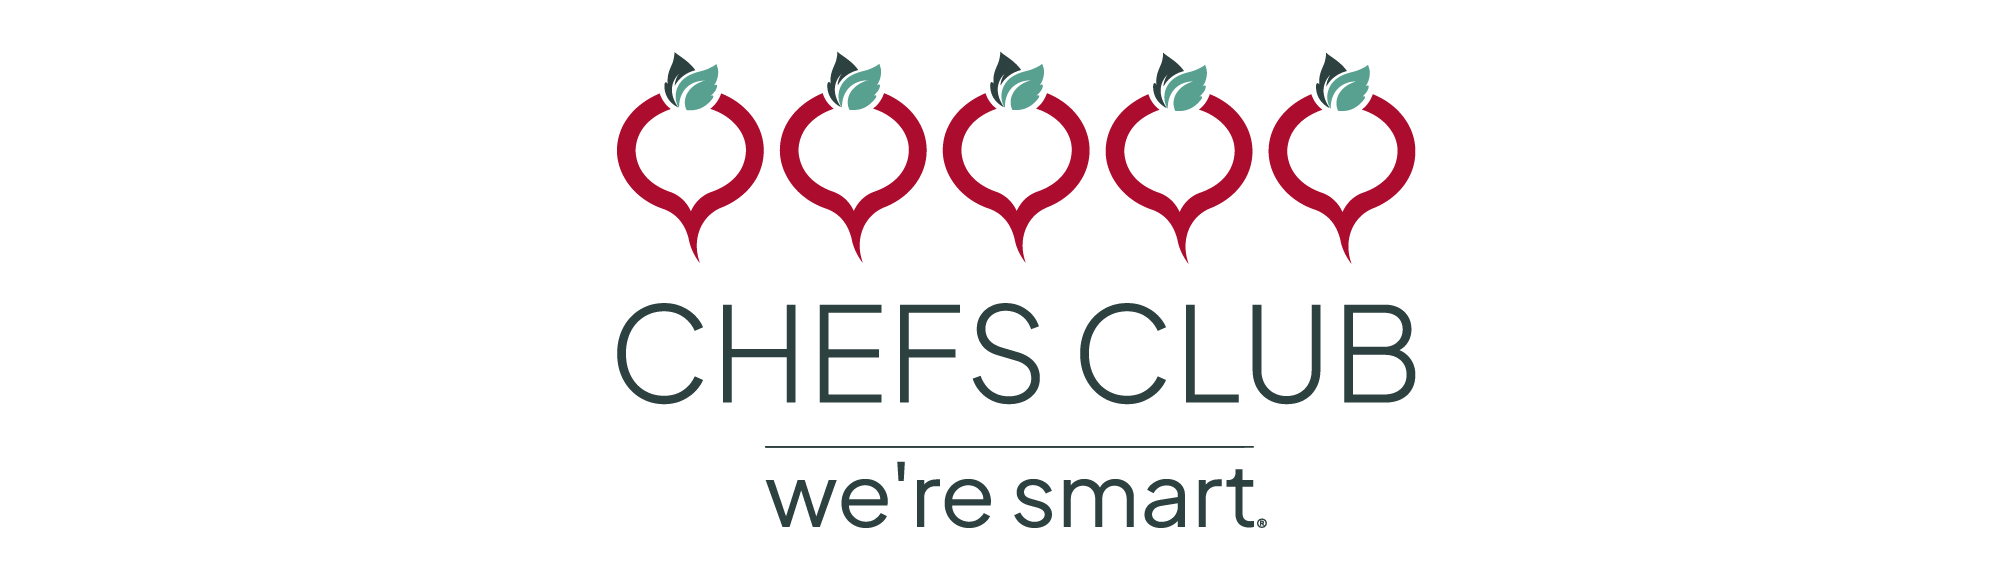 we're smart chefs club logo